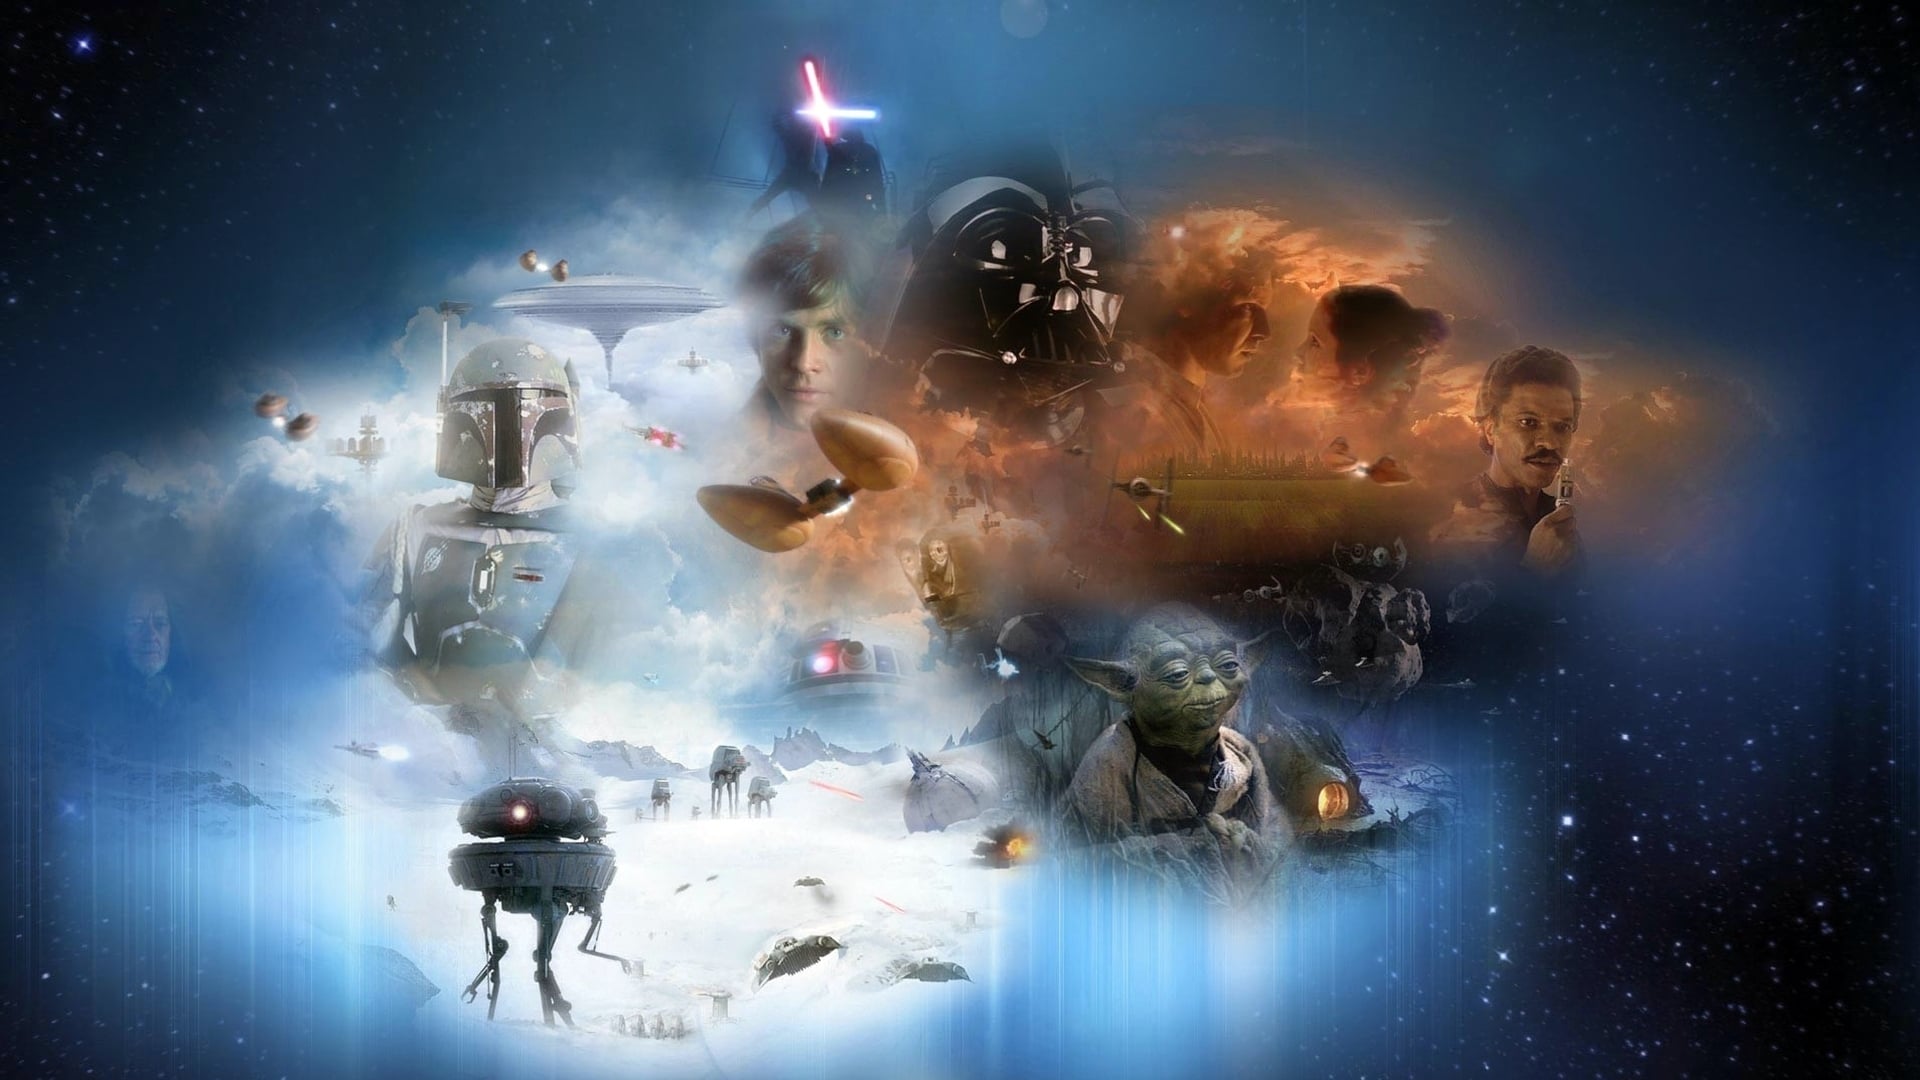 Image du film Star Wars Episode V : l'Empire contre-attaque ju1kteqgqwh9kpnsuqgohp1tteejpg